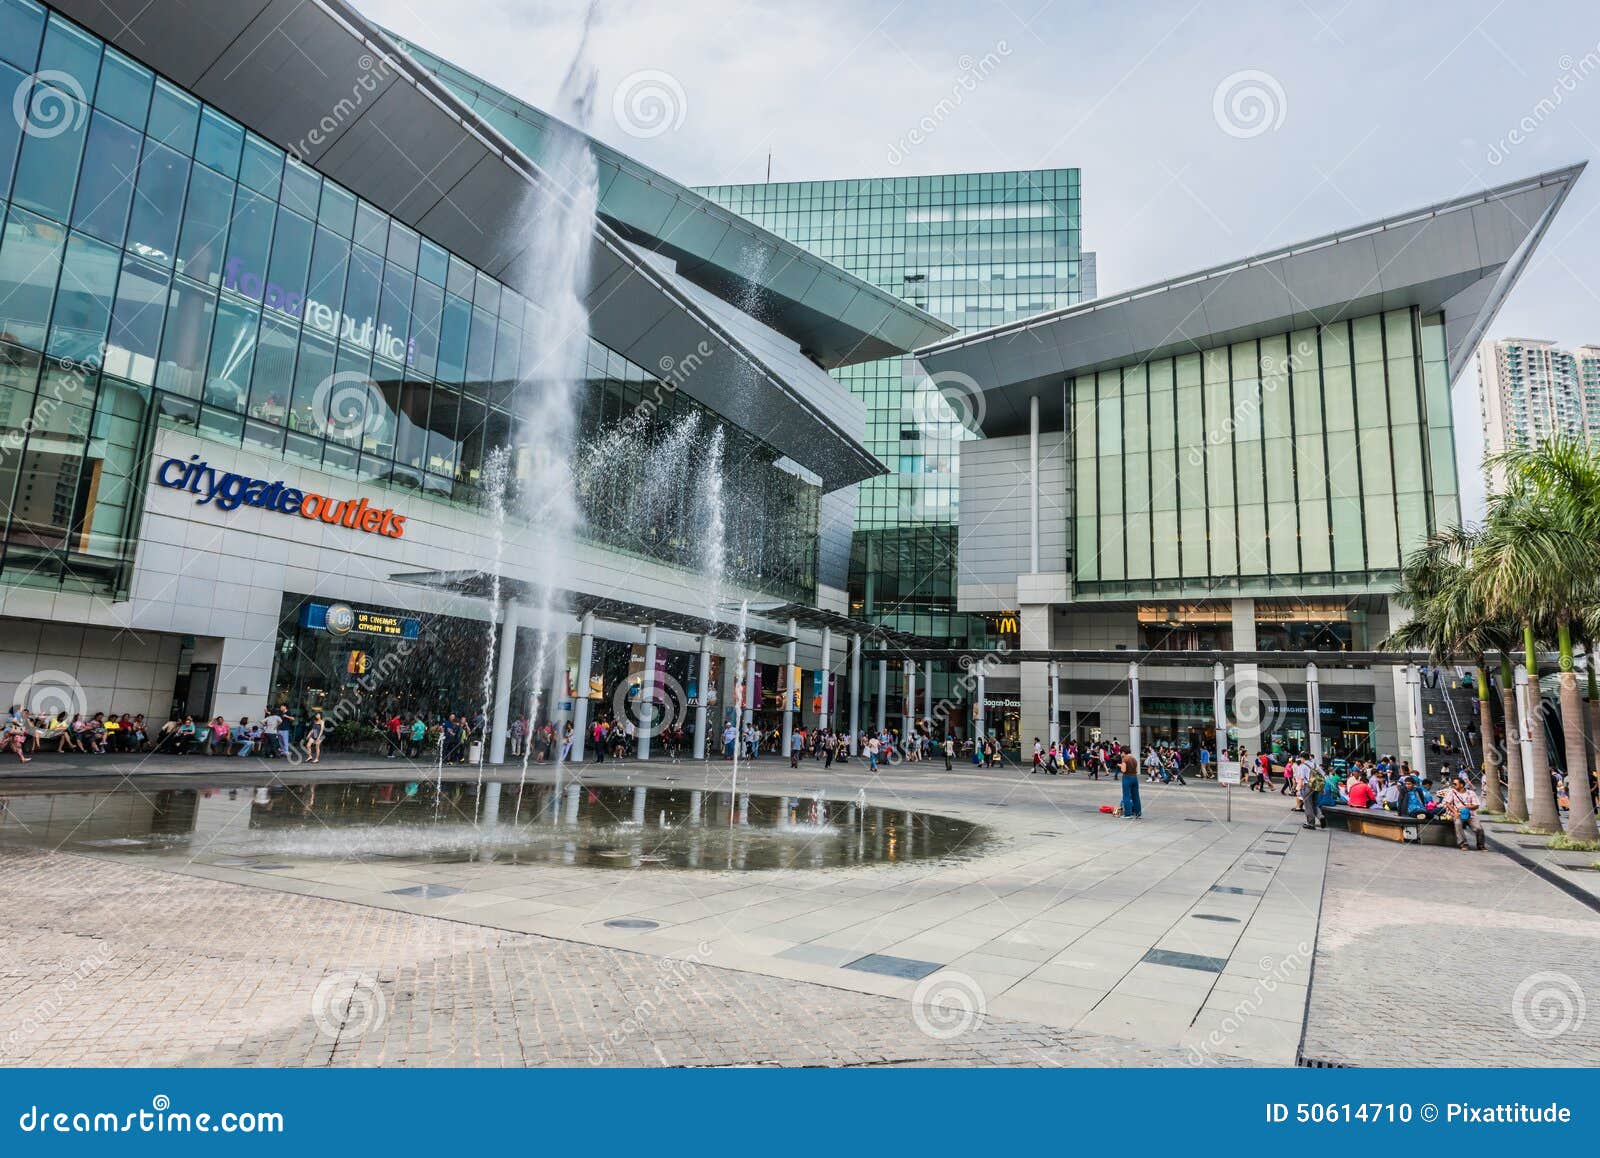 People CityGate Outlet Shopping Mall Tung Chung Wan Lantau Island Hong Kong Editorial Image ...